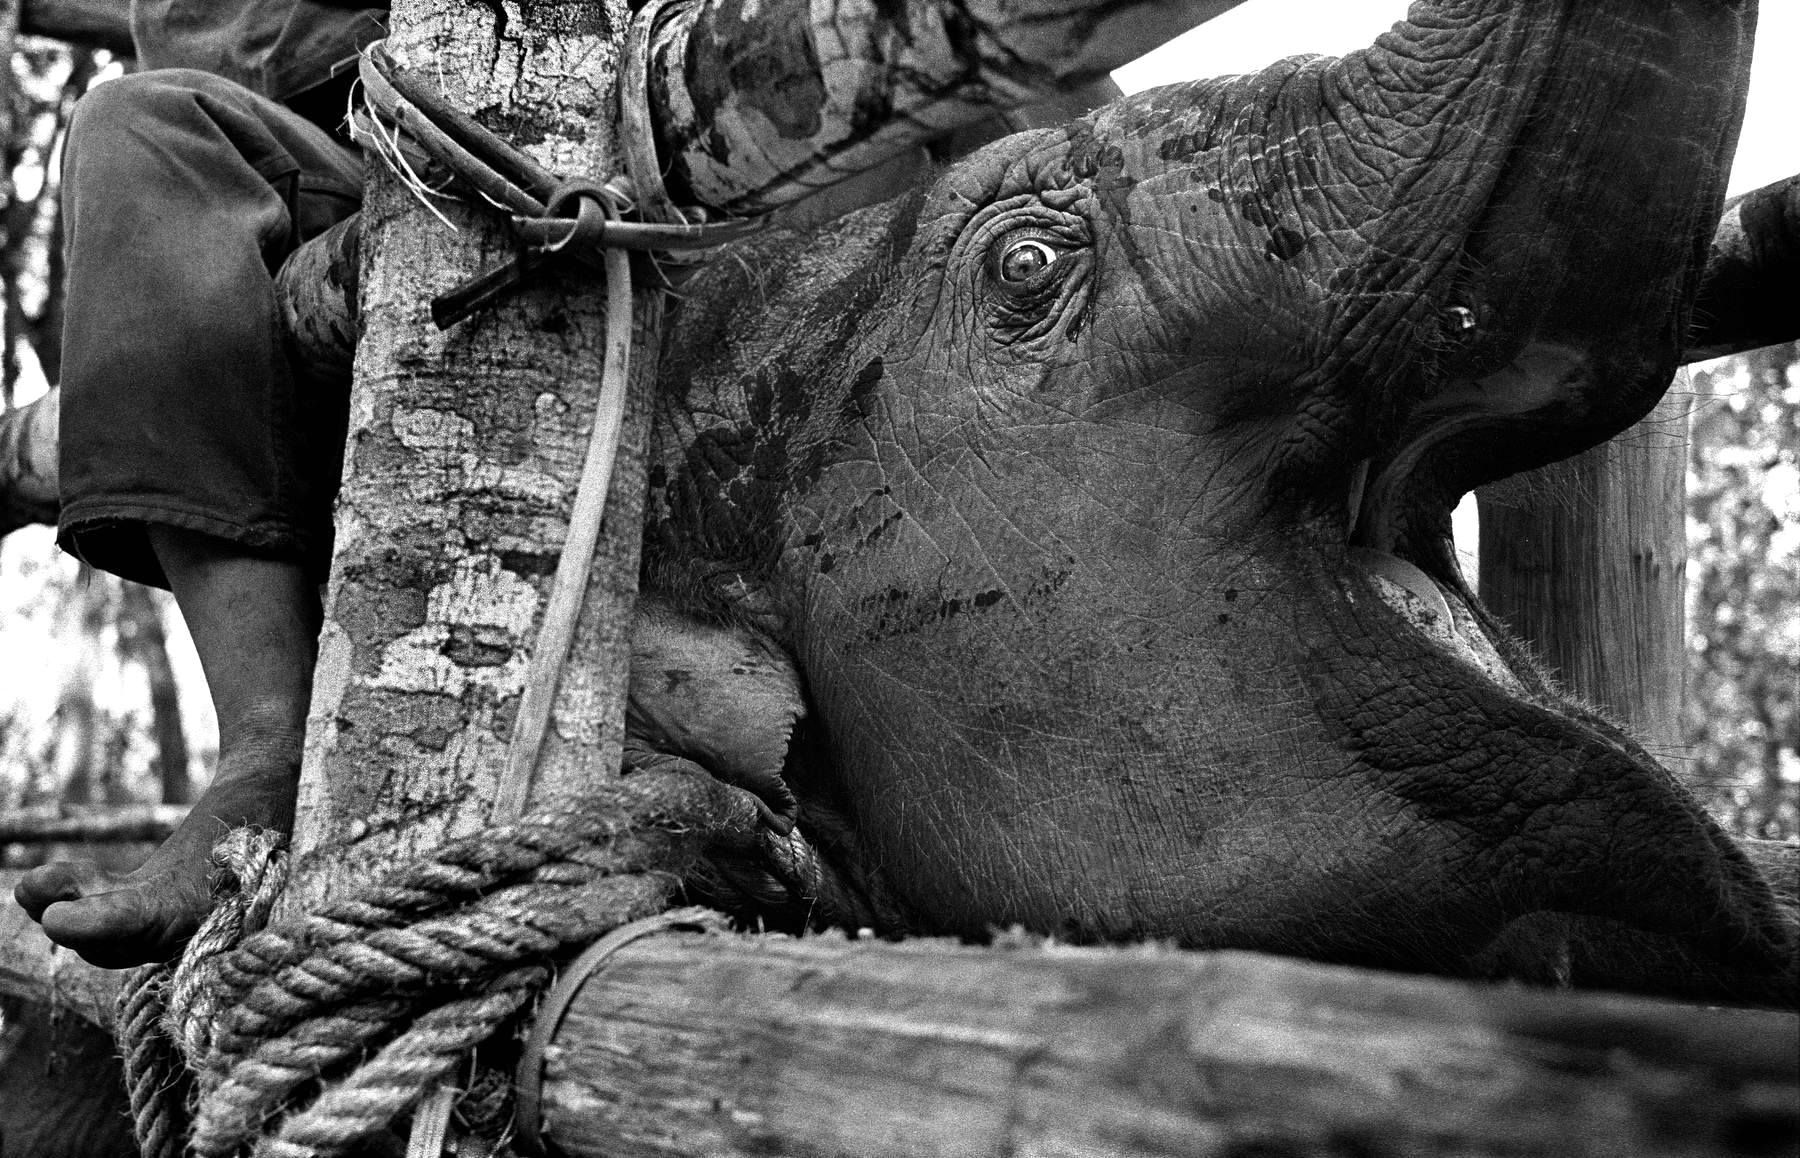 The Tragedy Of Elephant SlaveryCreating Animal Awareness